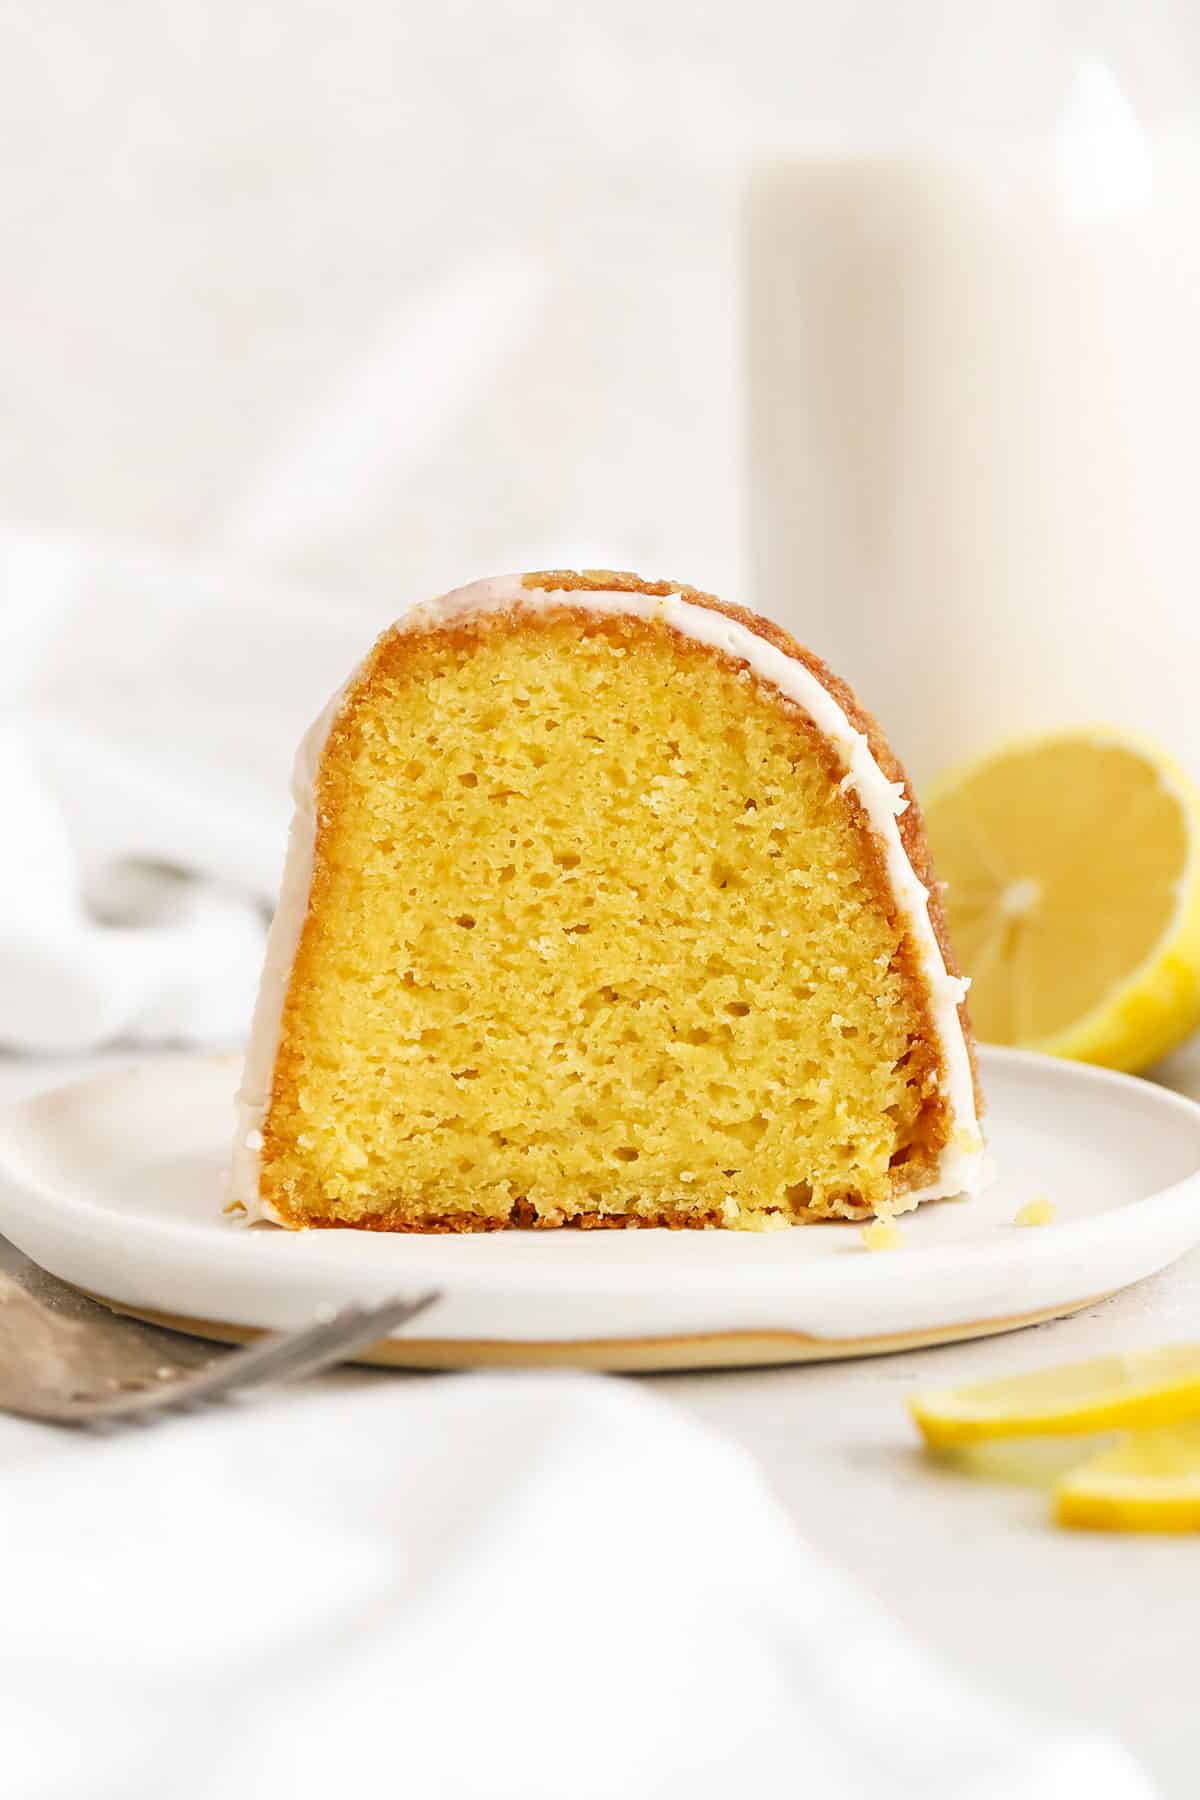 A slice of gluten-free lemon bundt cake on a white plate